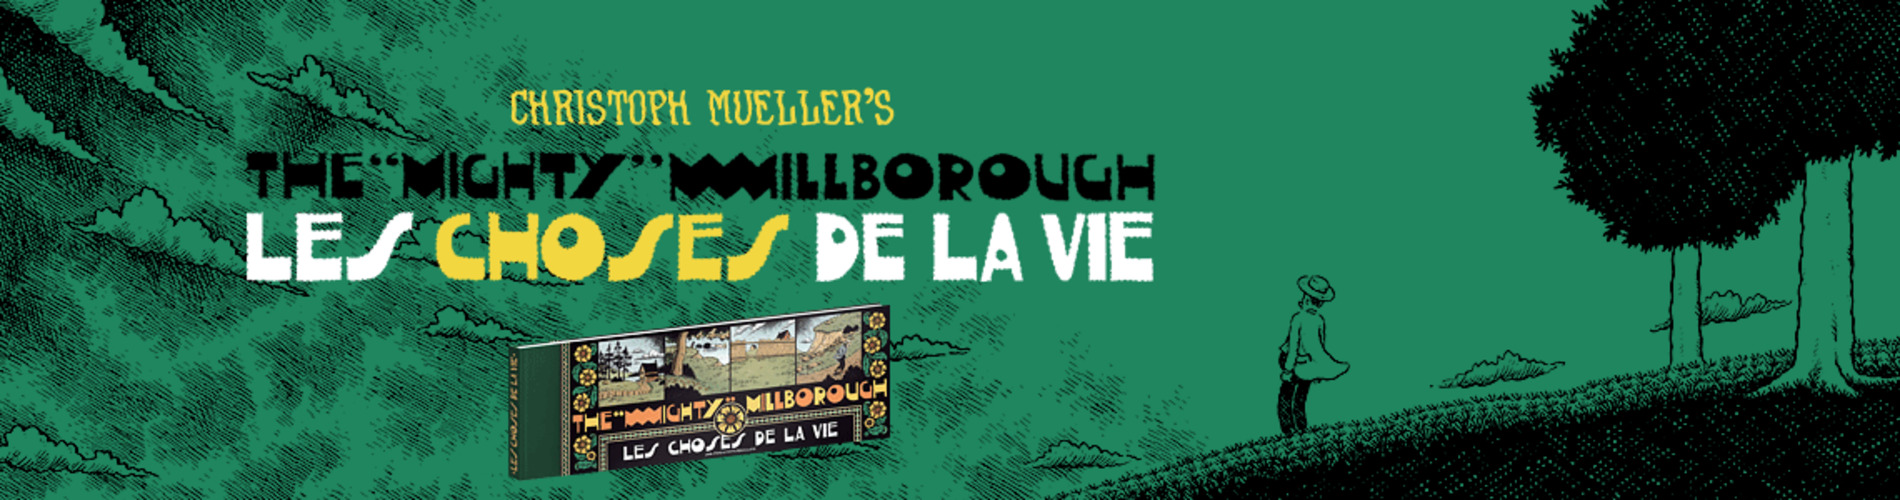 The Mighty Millborough, Les choses de la vie